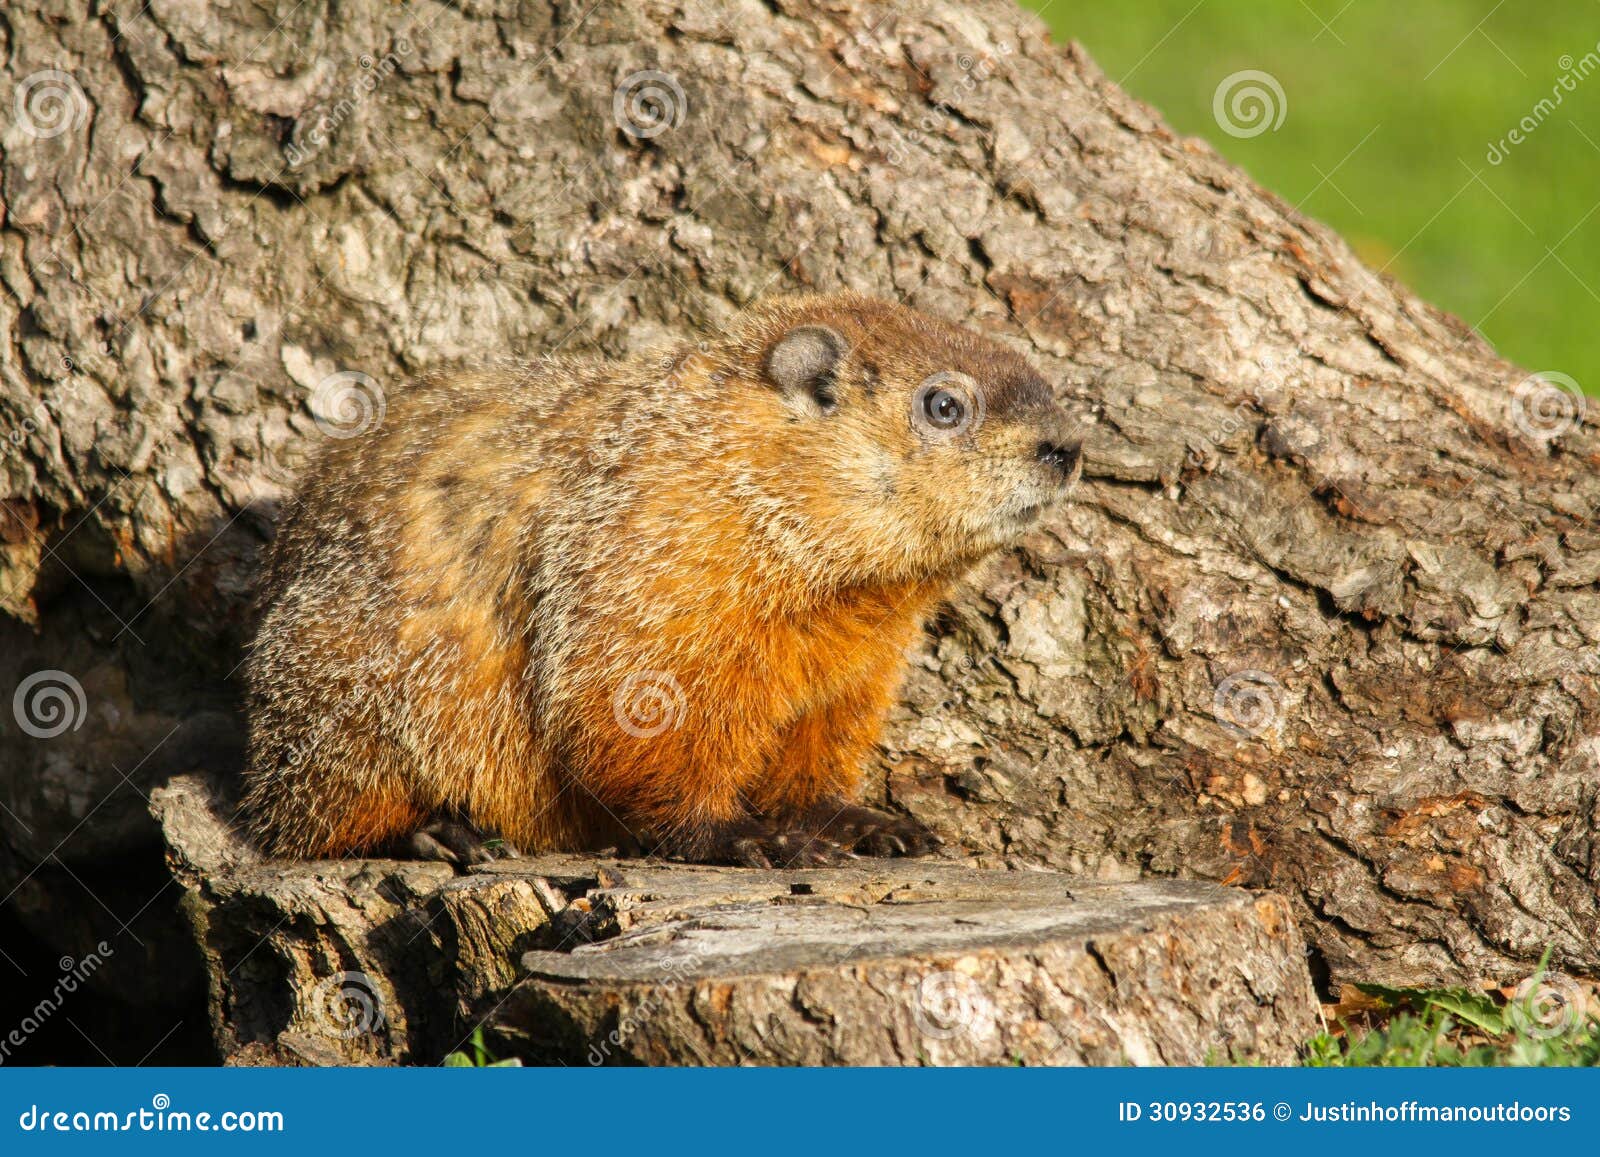 groundhog sitting on tree stump